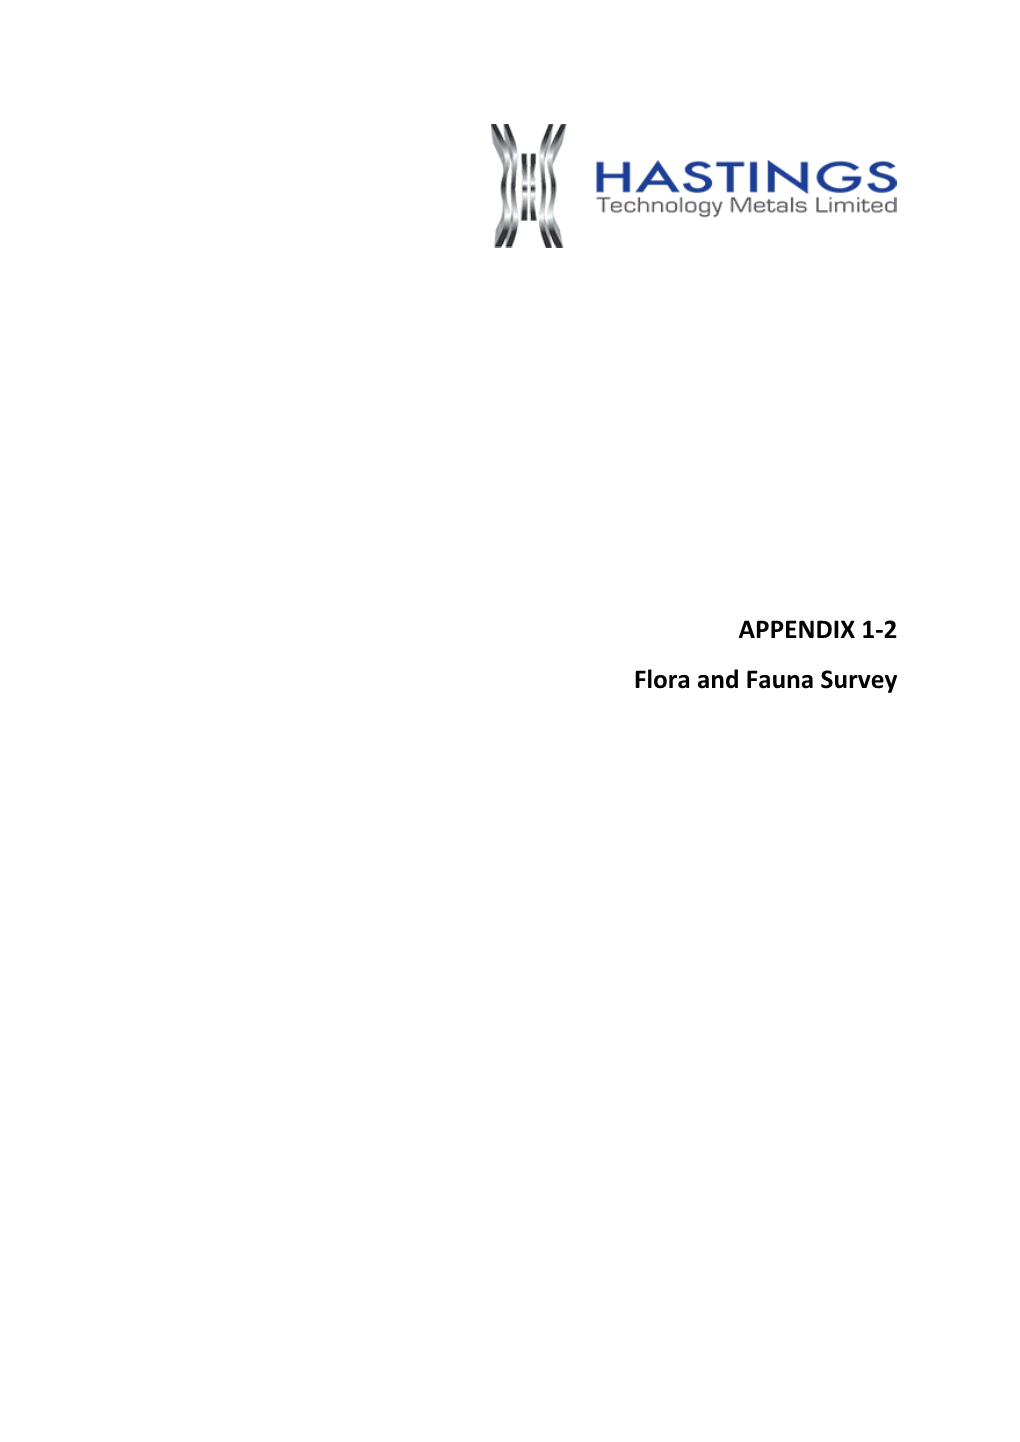 APPENDIX 1-2 Flora and Fauna Survey